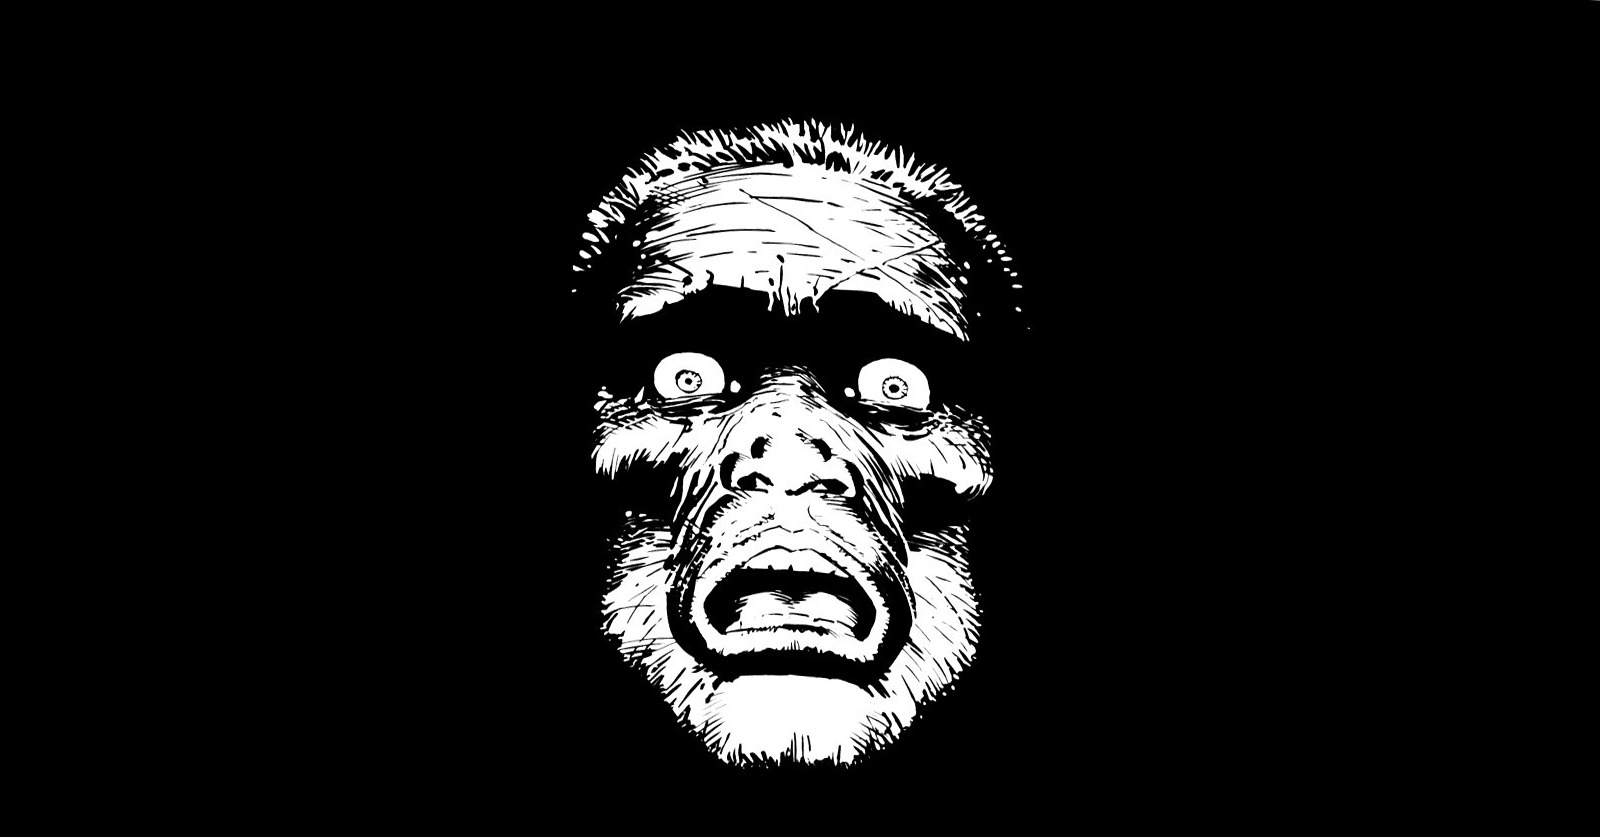 Scare Man Head Black And White Grayscale Face Comics Wallpaper